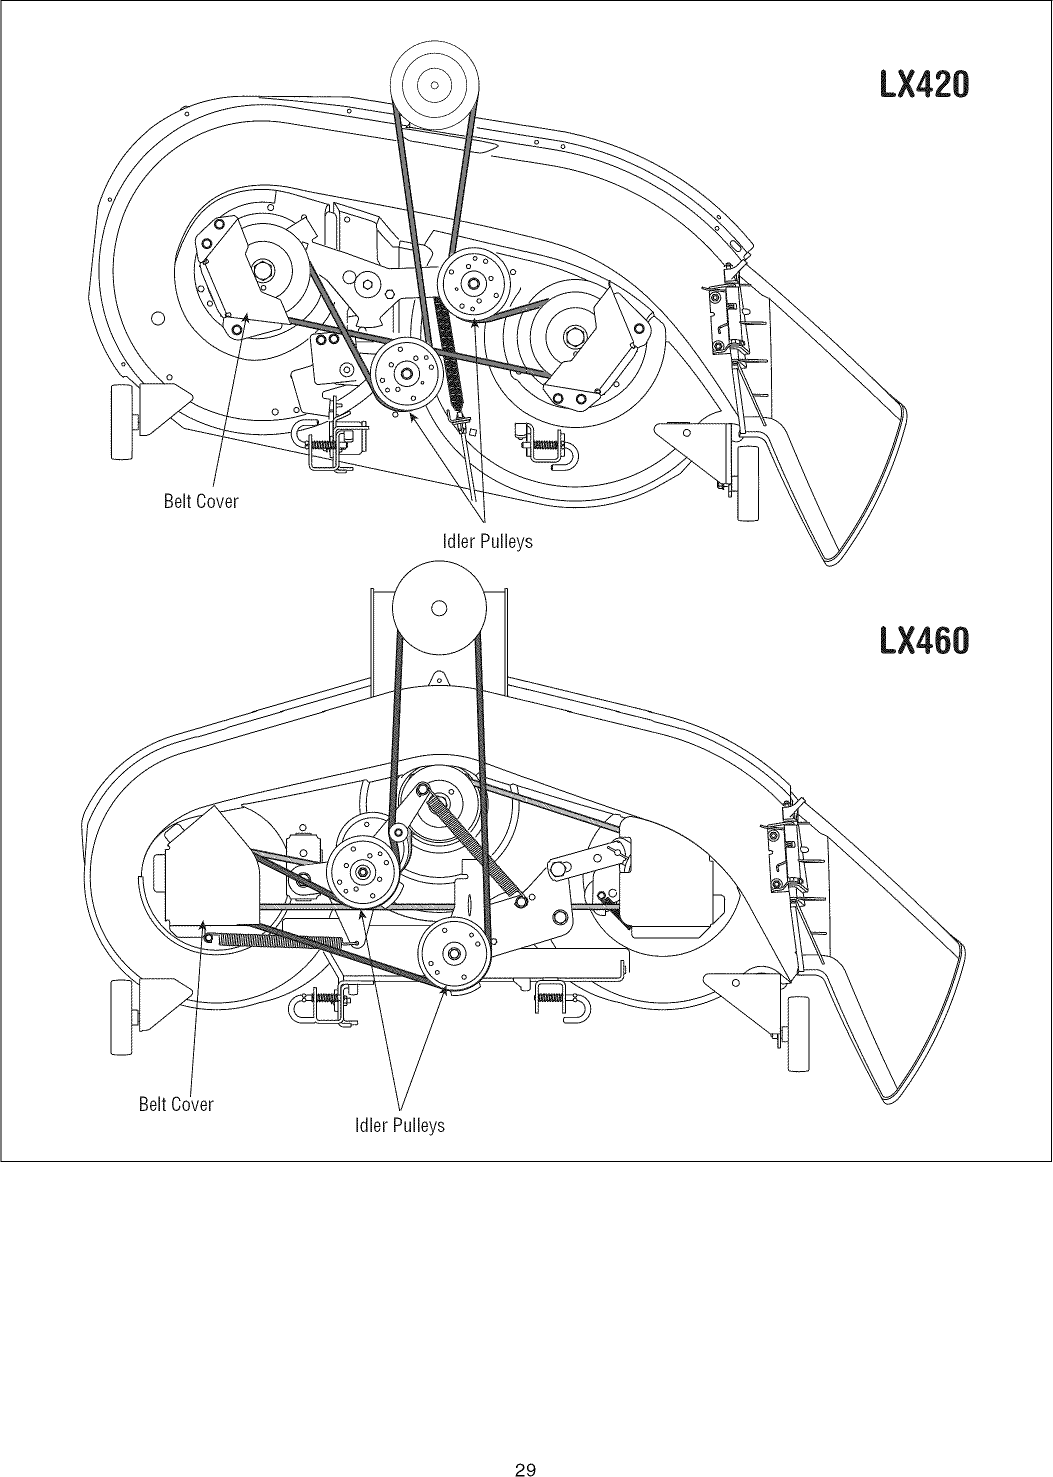 Toro Lx460 Parts Diagram - General Wiring Diagram